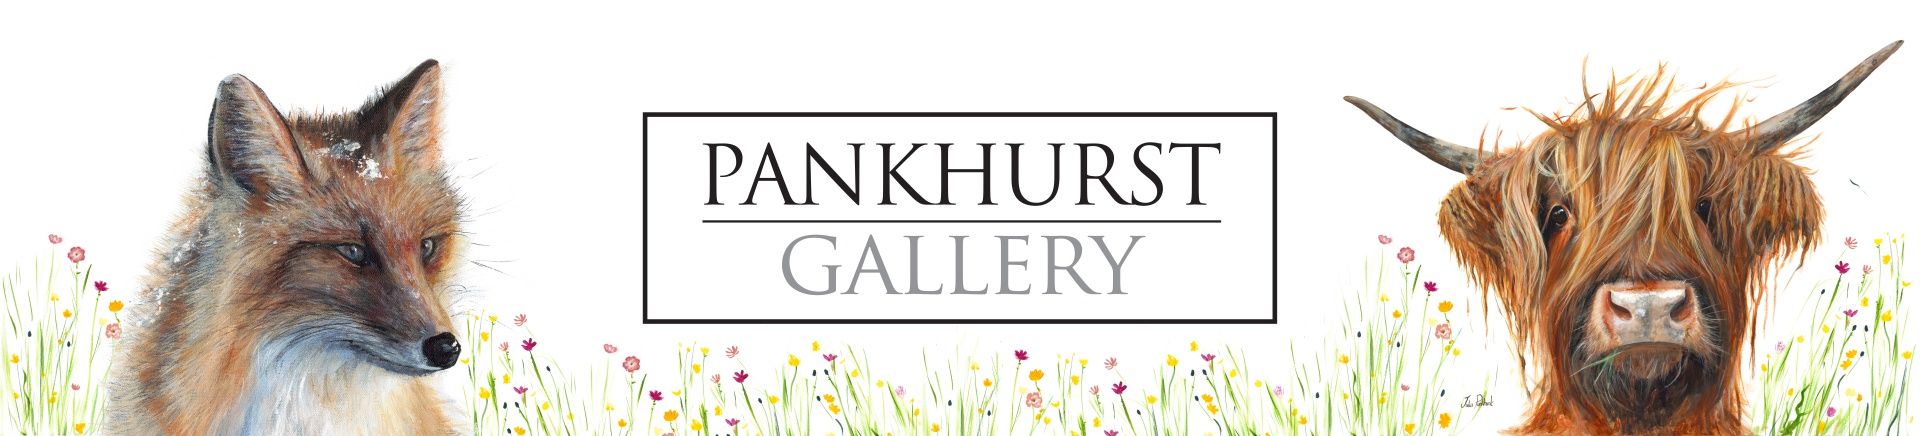 pankhurst gallery